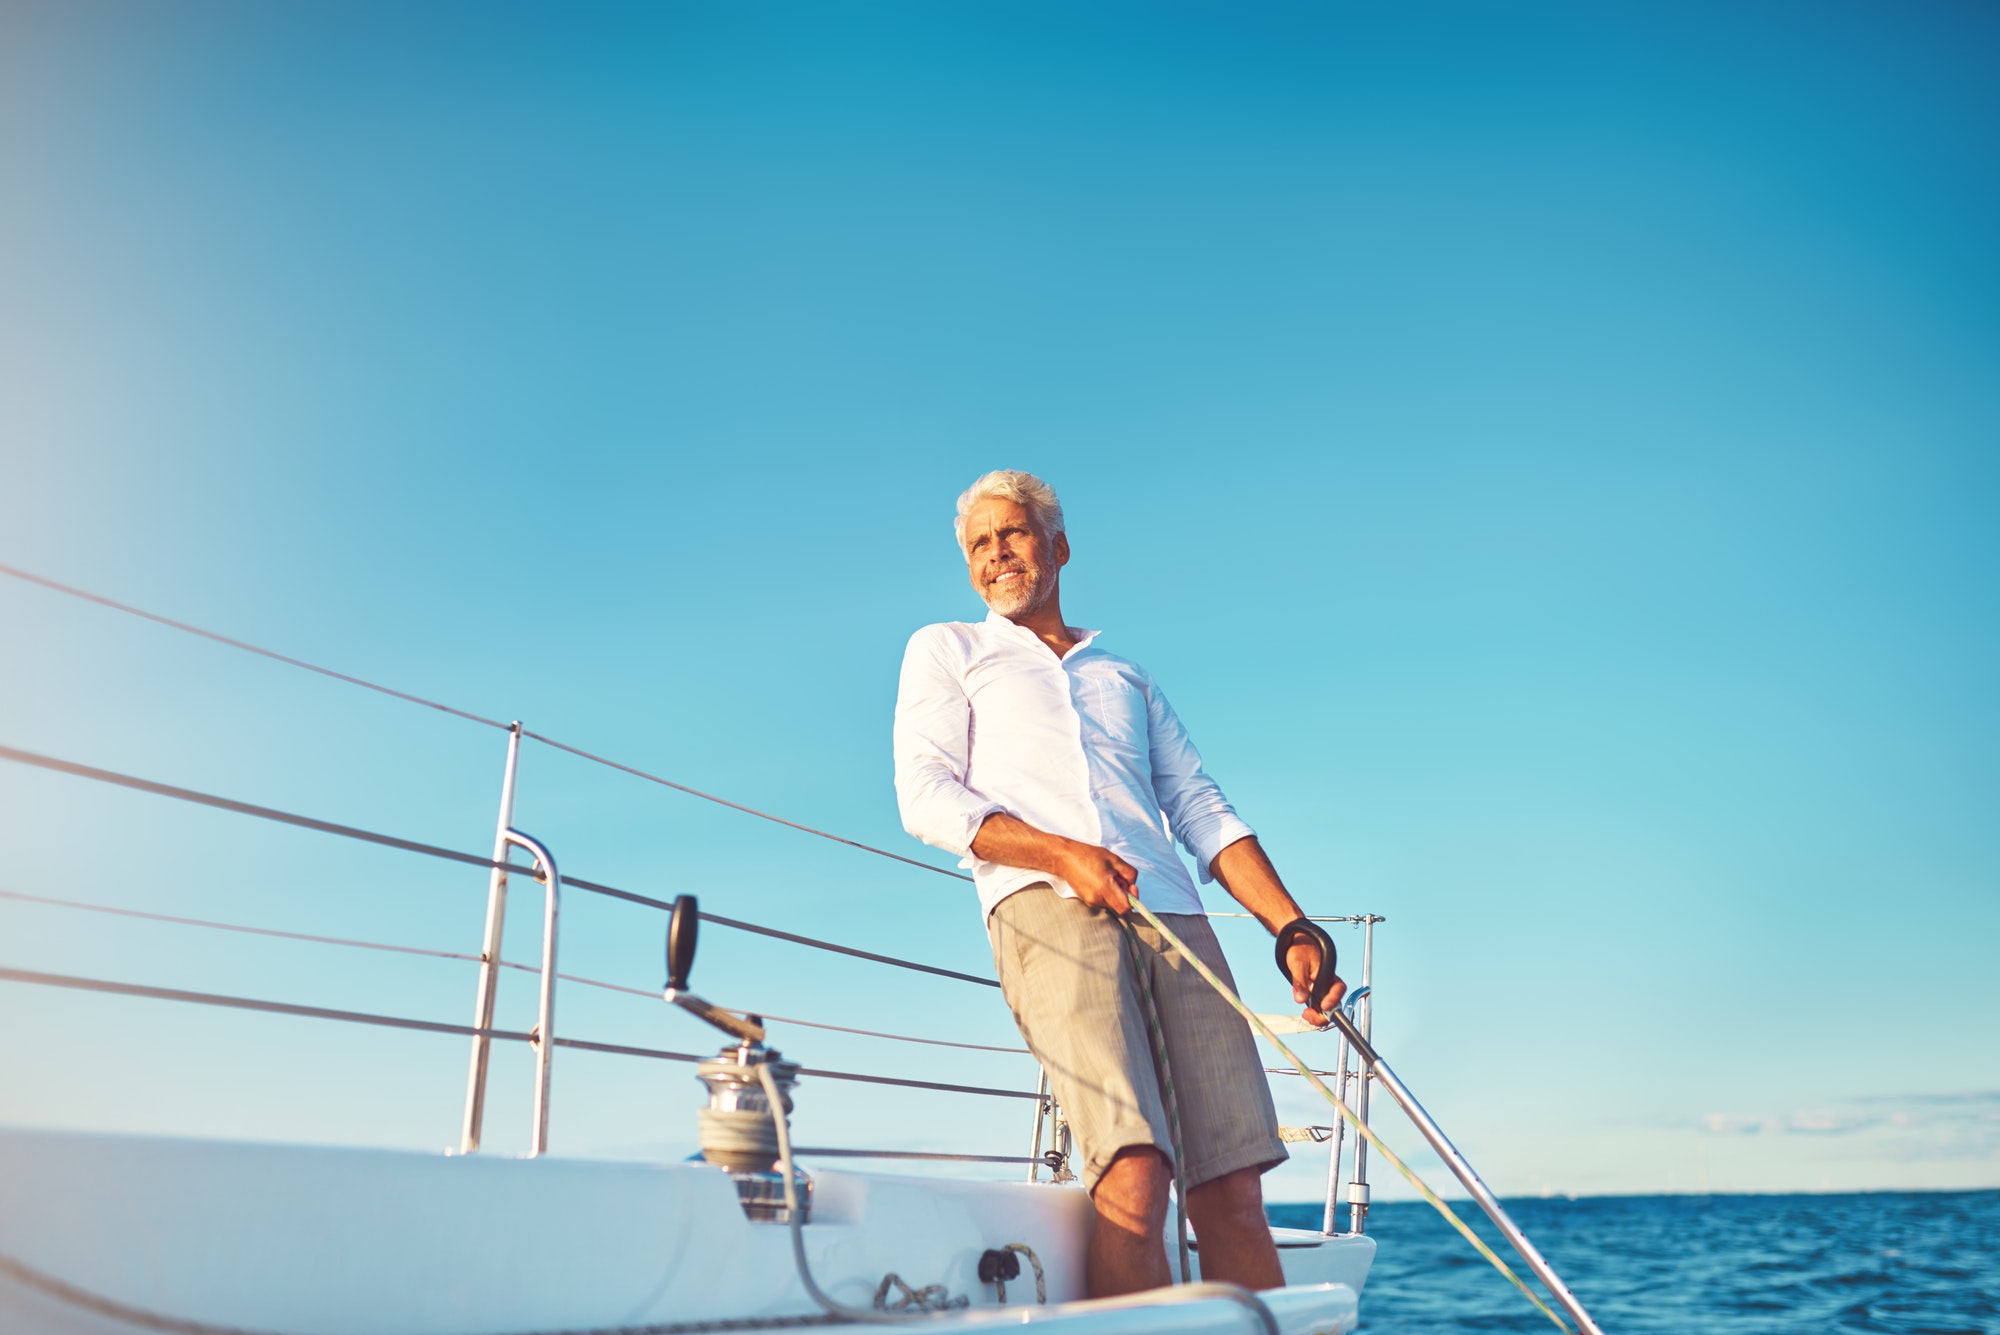 Smiling mature man enjoying a day sailing on the ocean